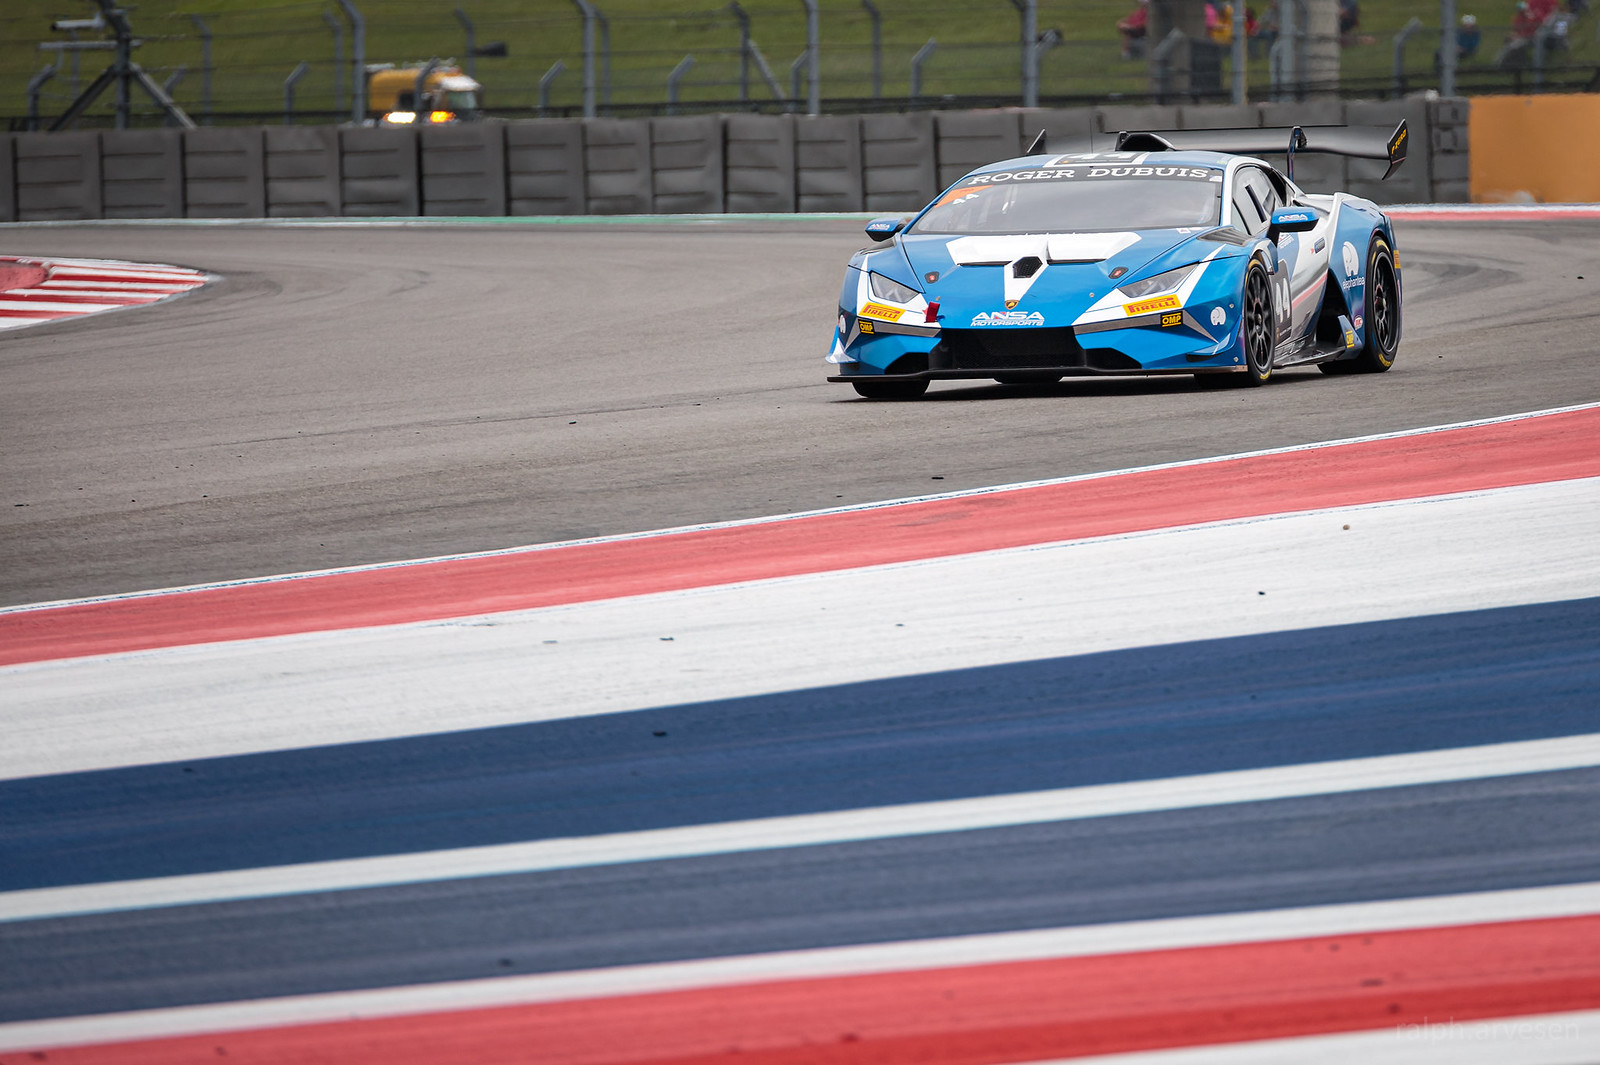 Lamborghini Super Trofeo Race | Texas Review | Ralph Arvesen